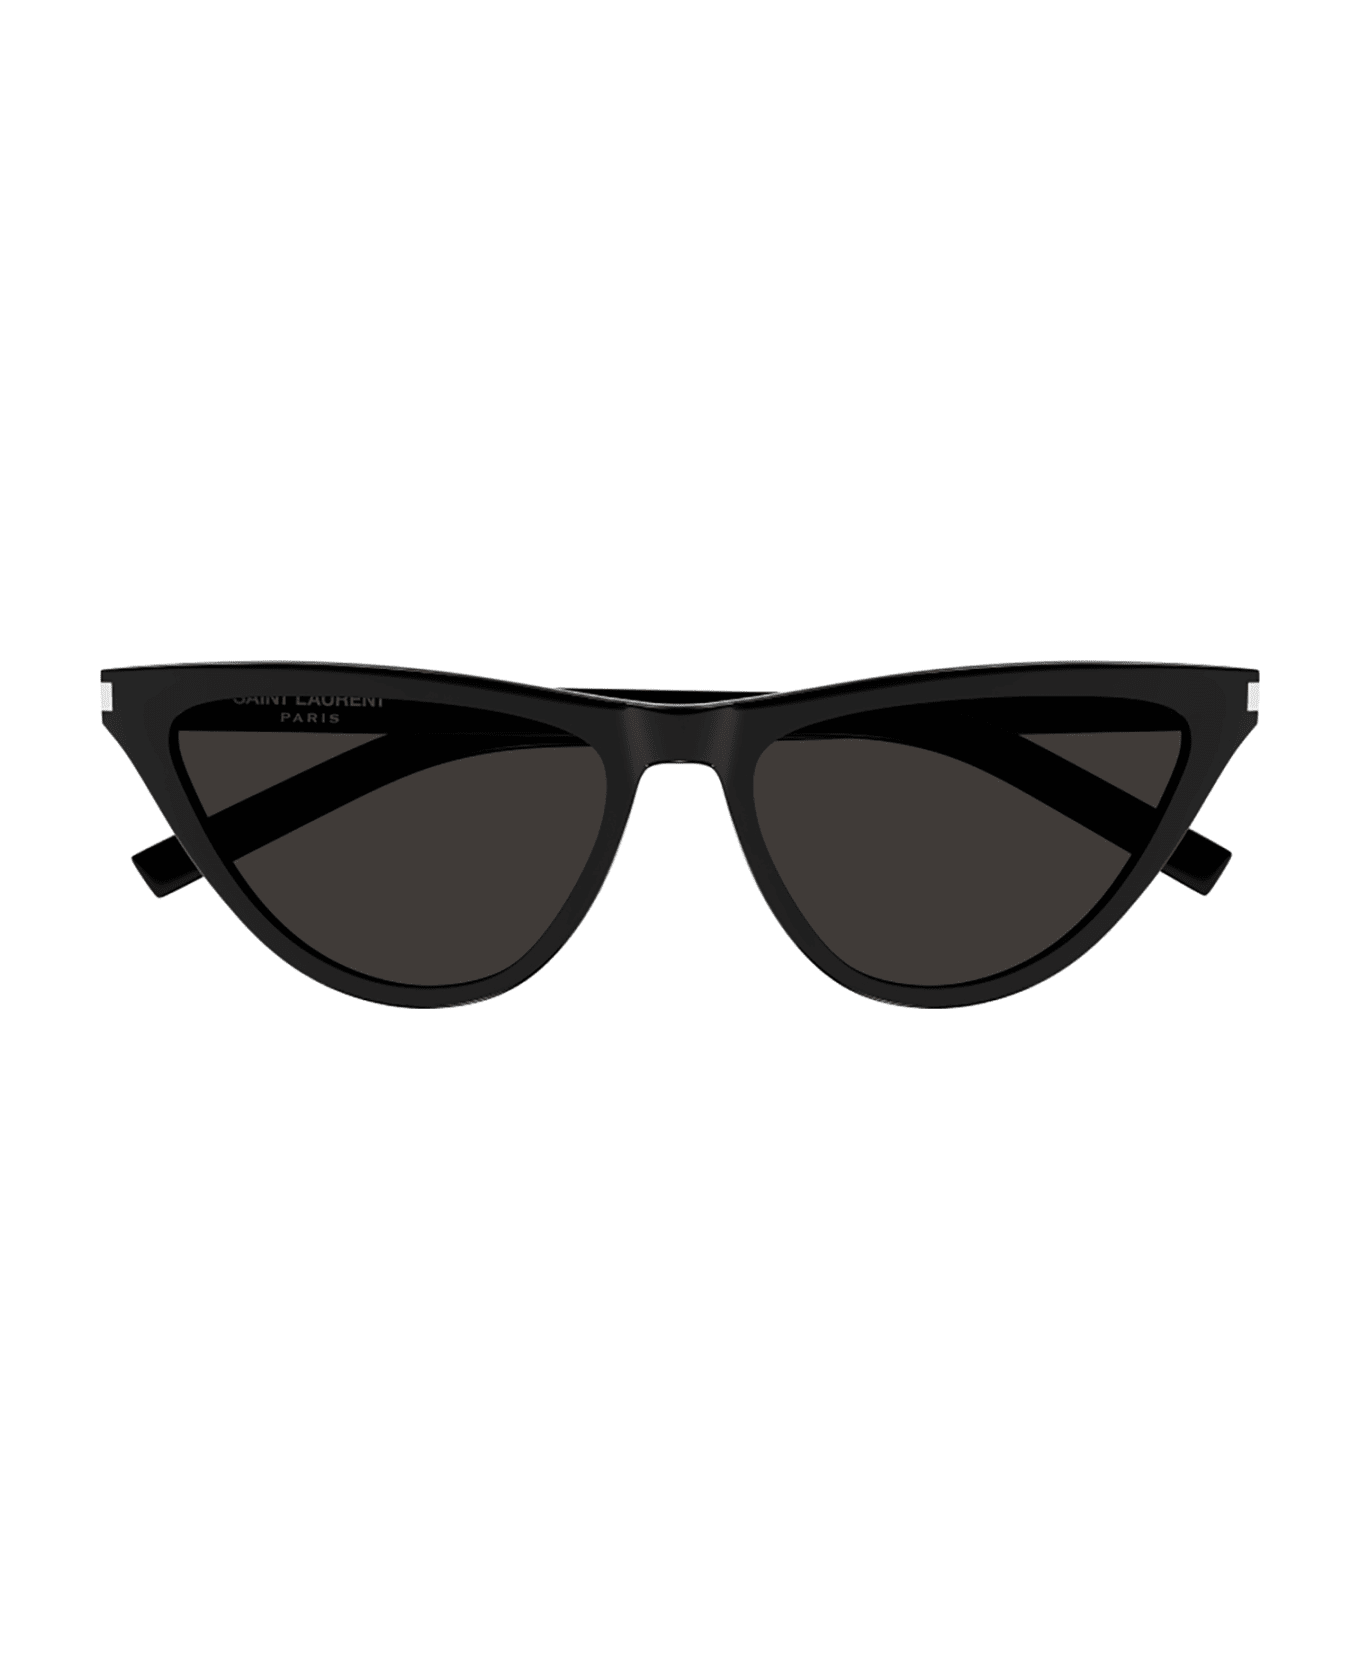 Saint Laurent Eyewear 1e624id0a - Black Black Black